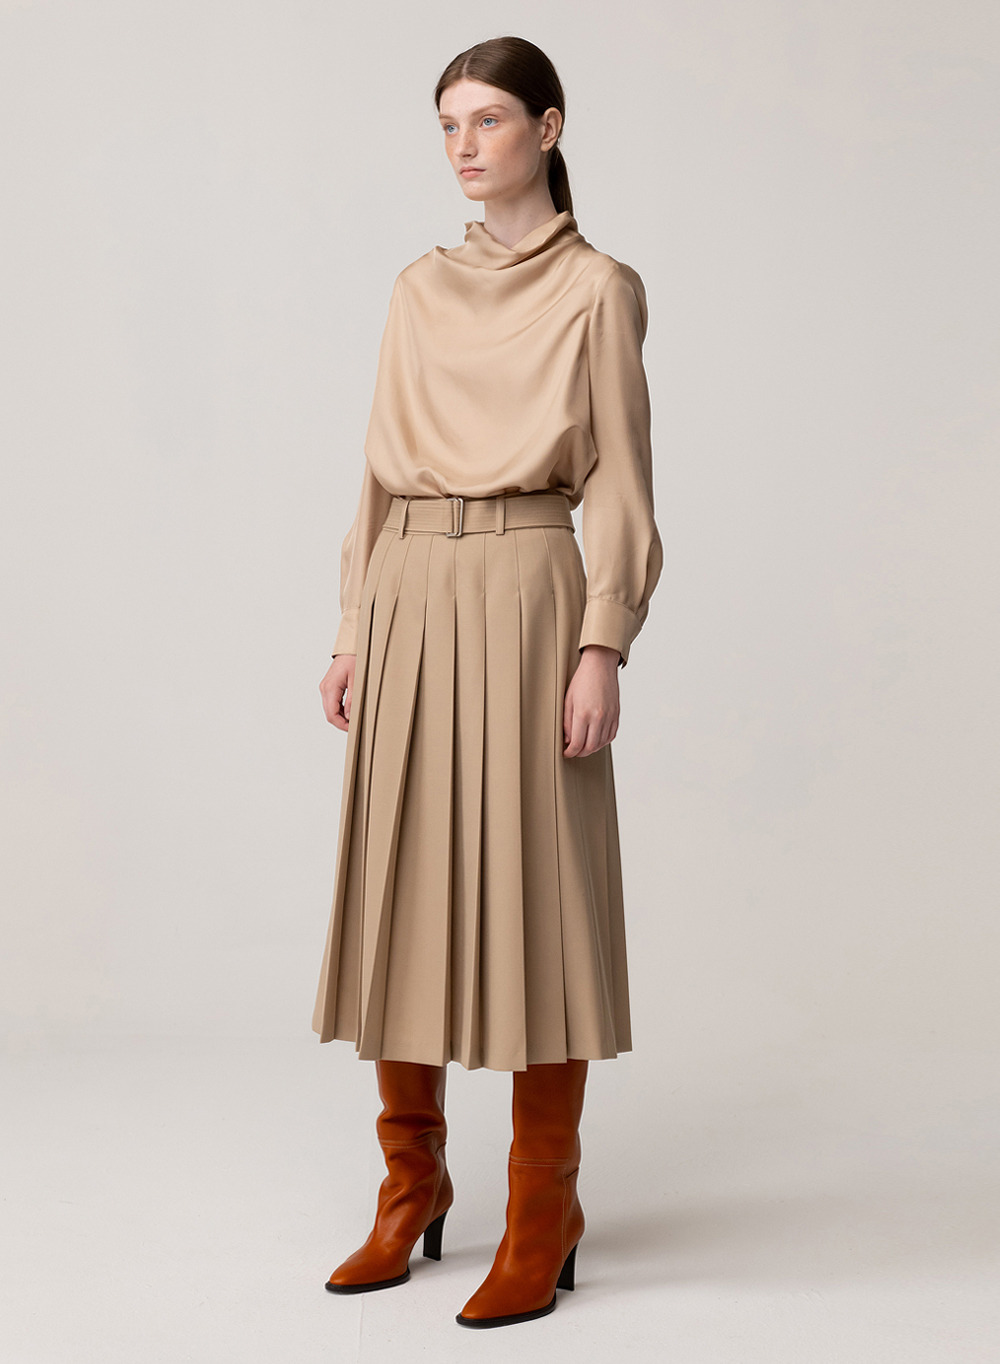 Wool Pleated Skirt Soft-Beige